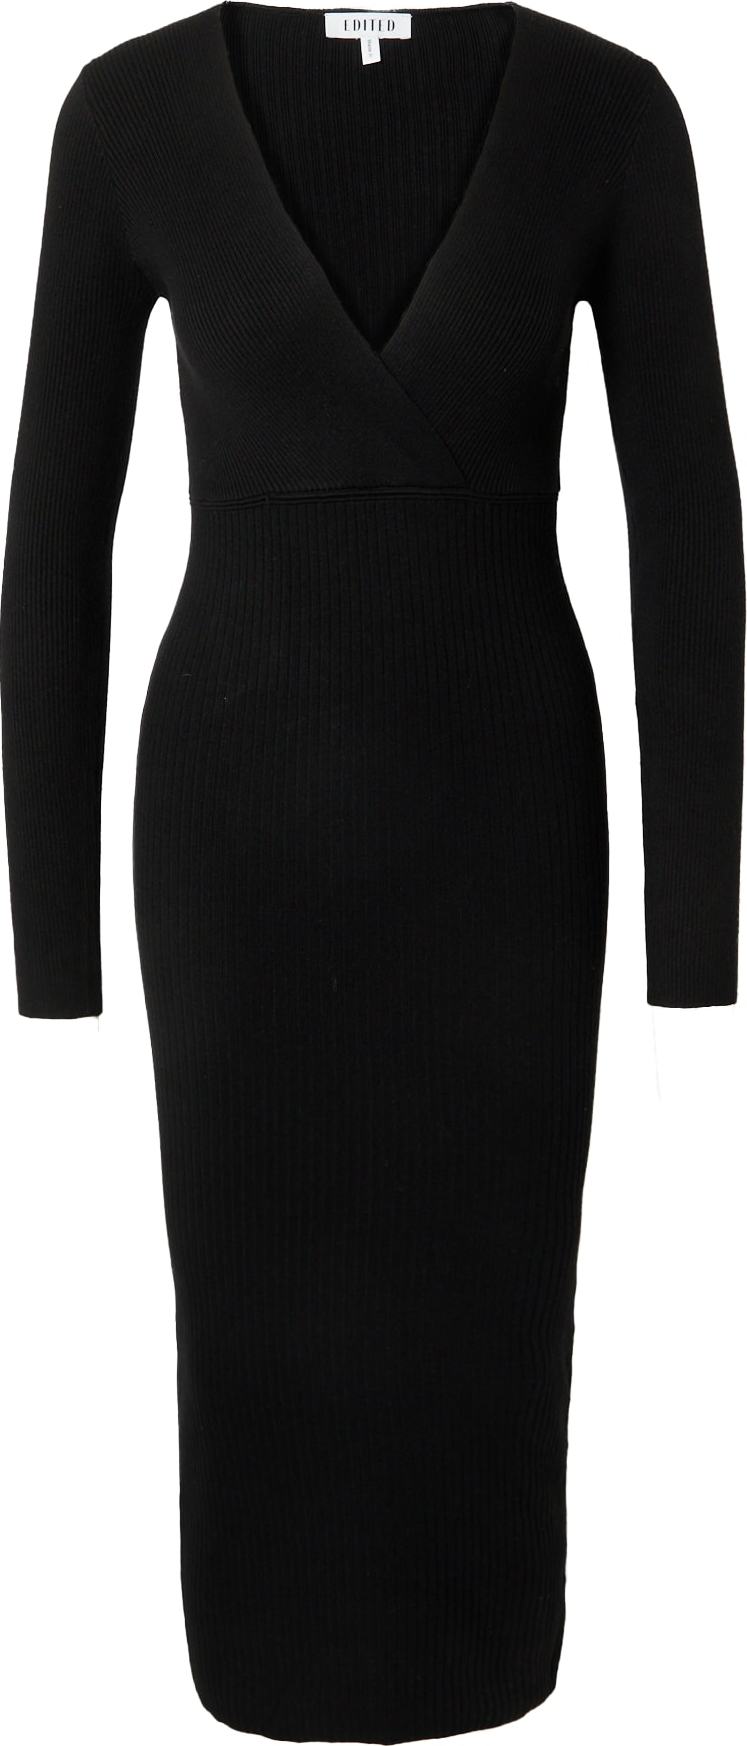 Šaty 'LIORA' EDITED černá